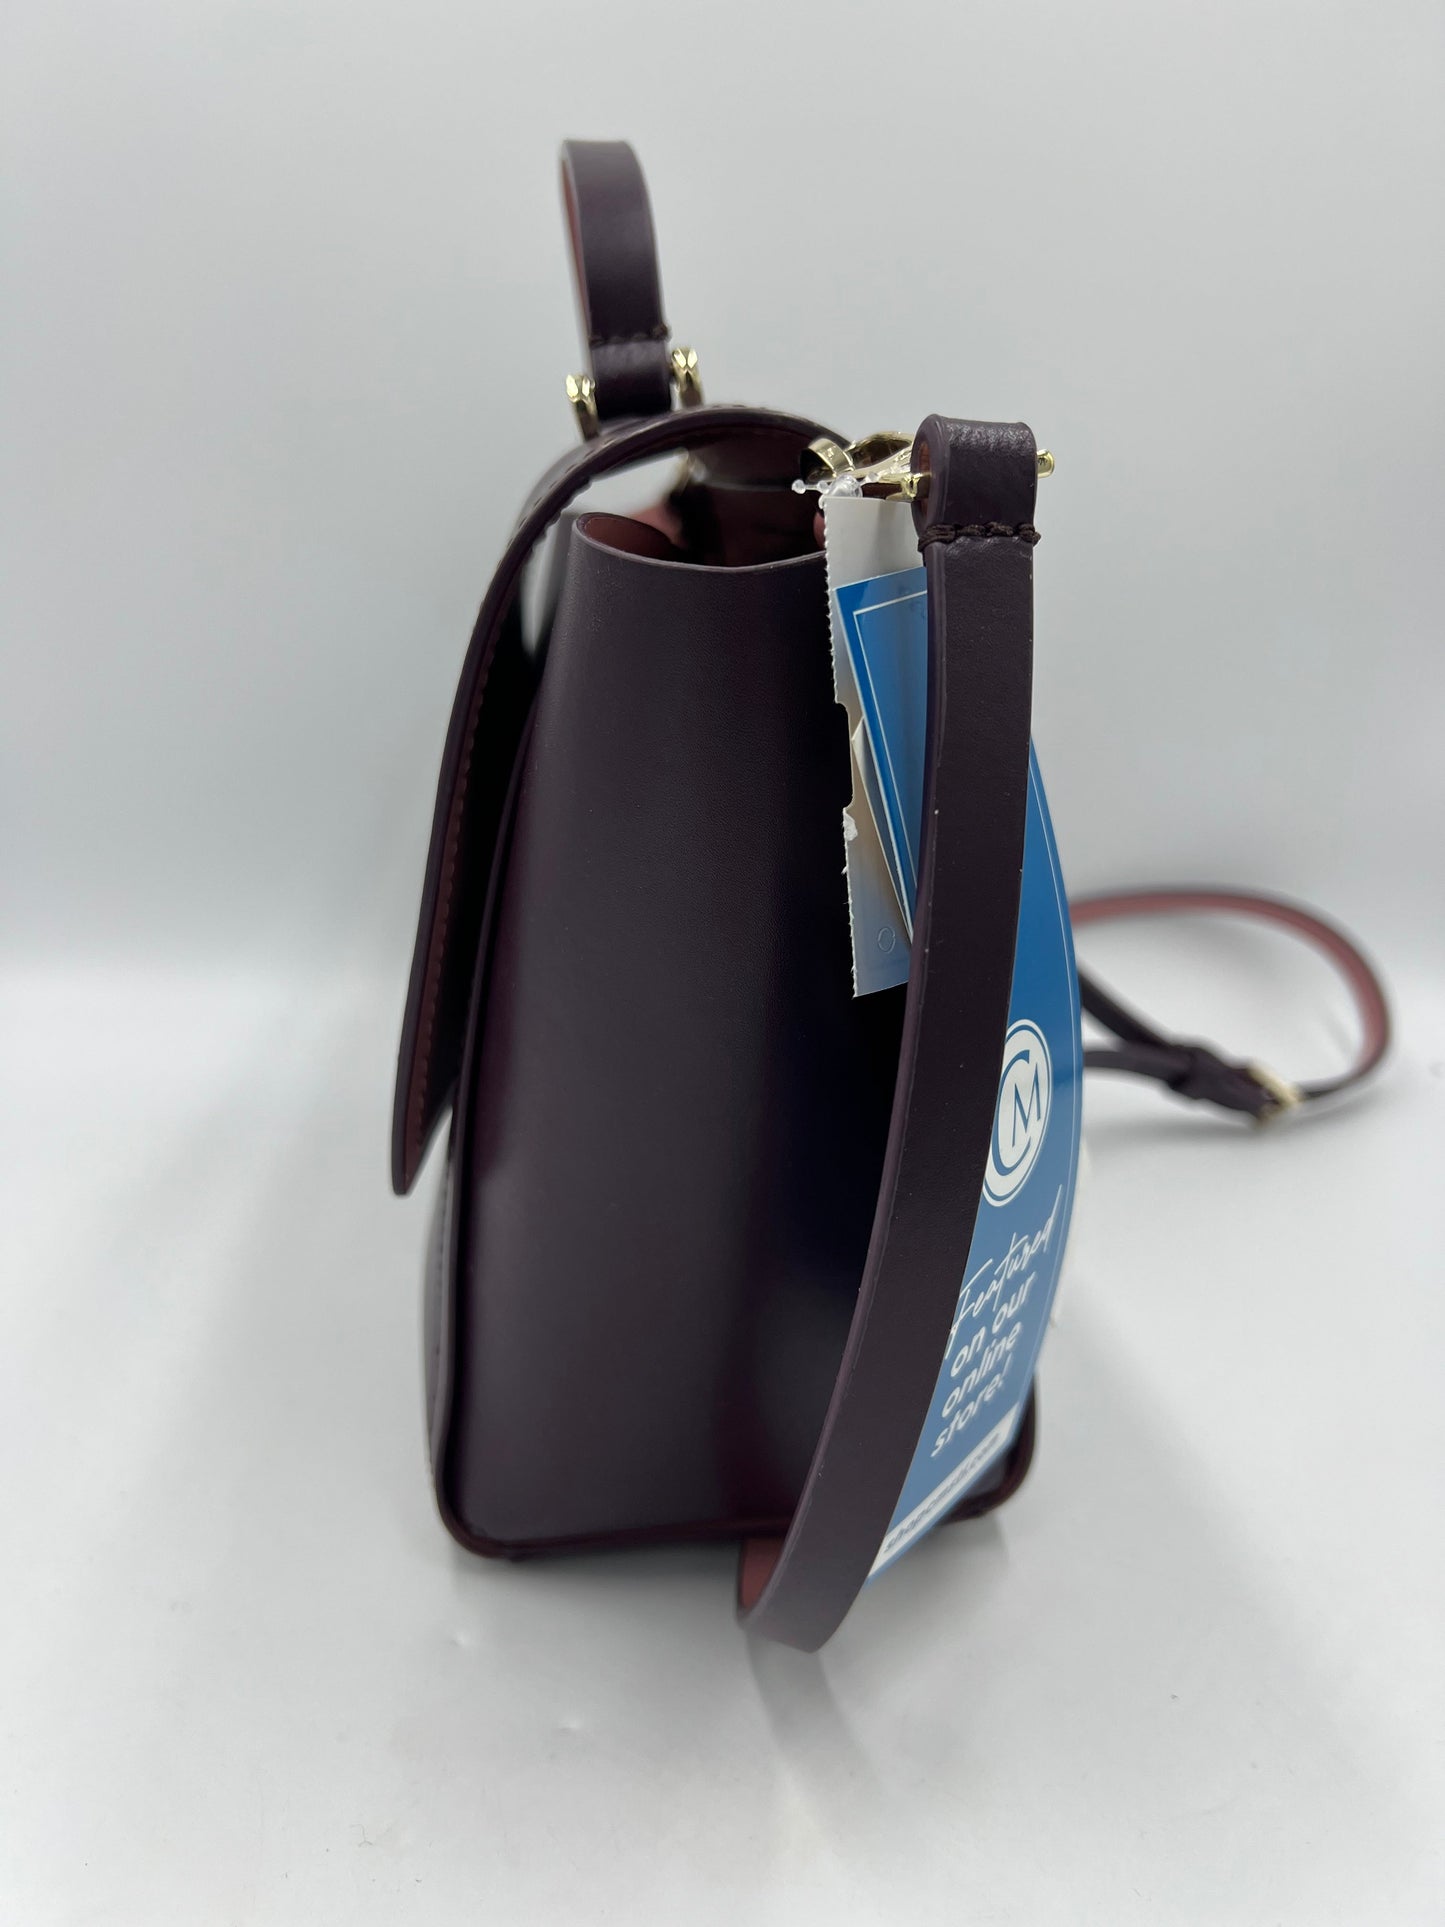 Handbag Designer By Kate Spade